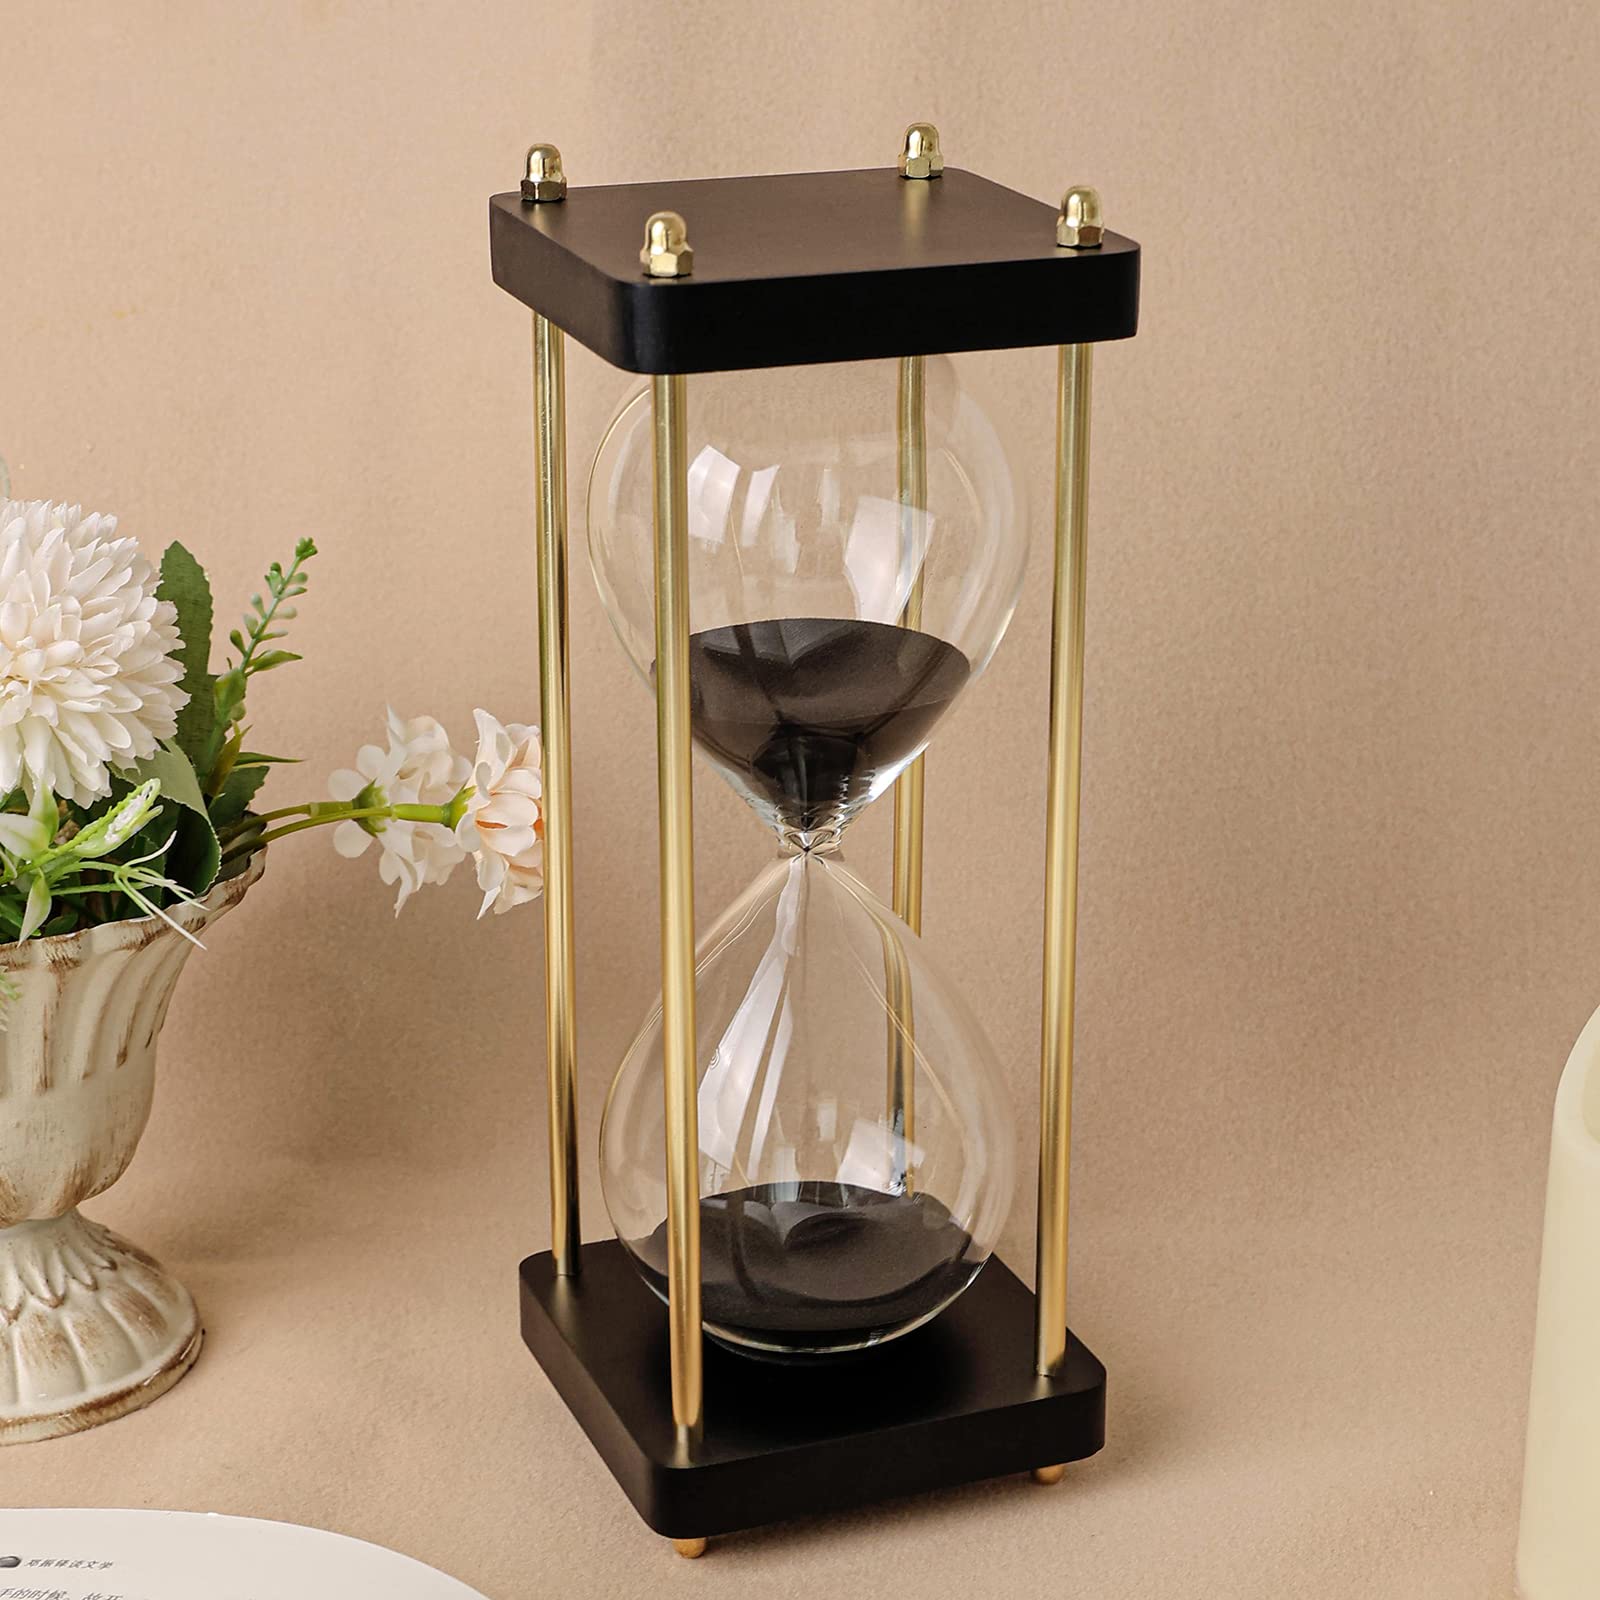 60 Minute Hourglass Timer,Rainbow Glass Hour Glass,Hourglass with Sand Timer for Gift,Hourglass Decor for Home, Desk,Office, Wedding Decor (Goldenrod Black)